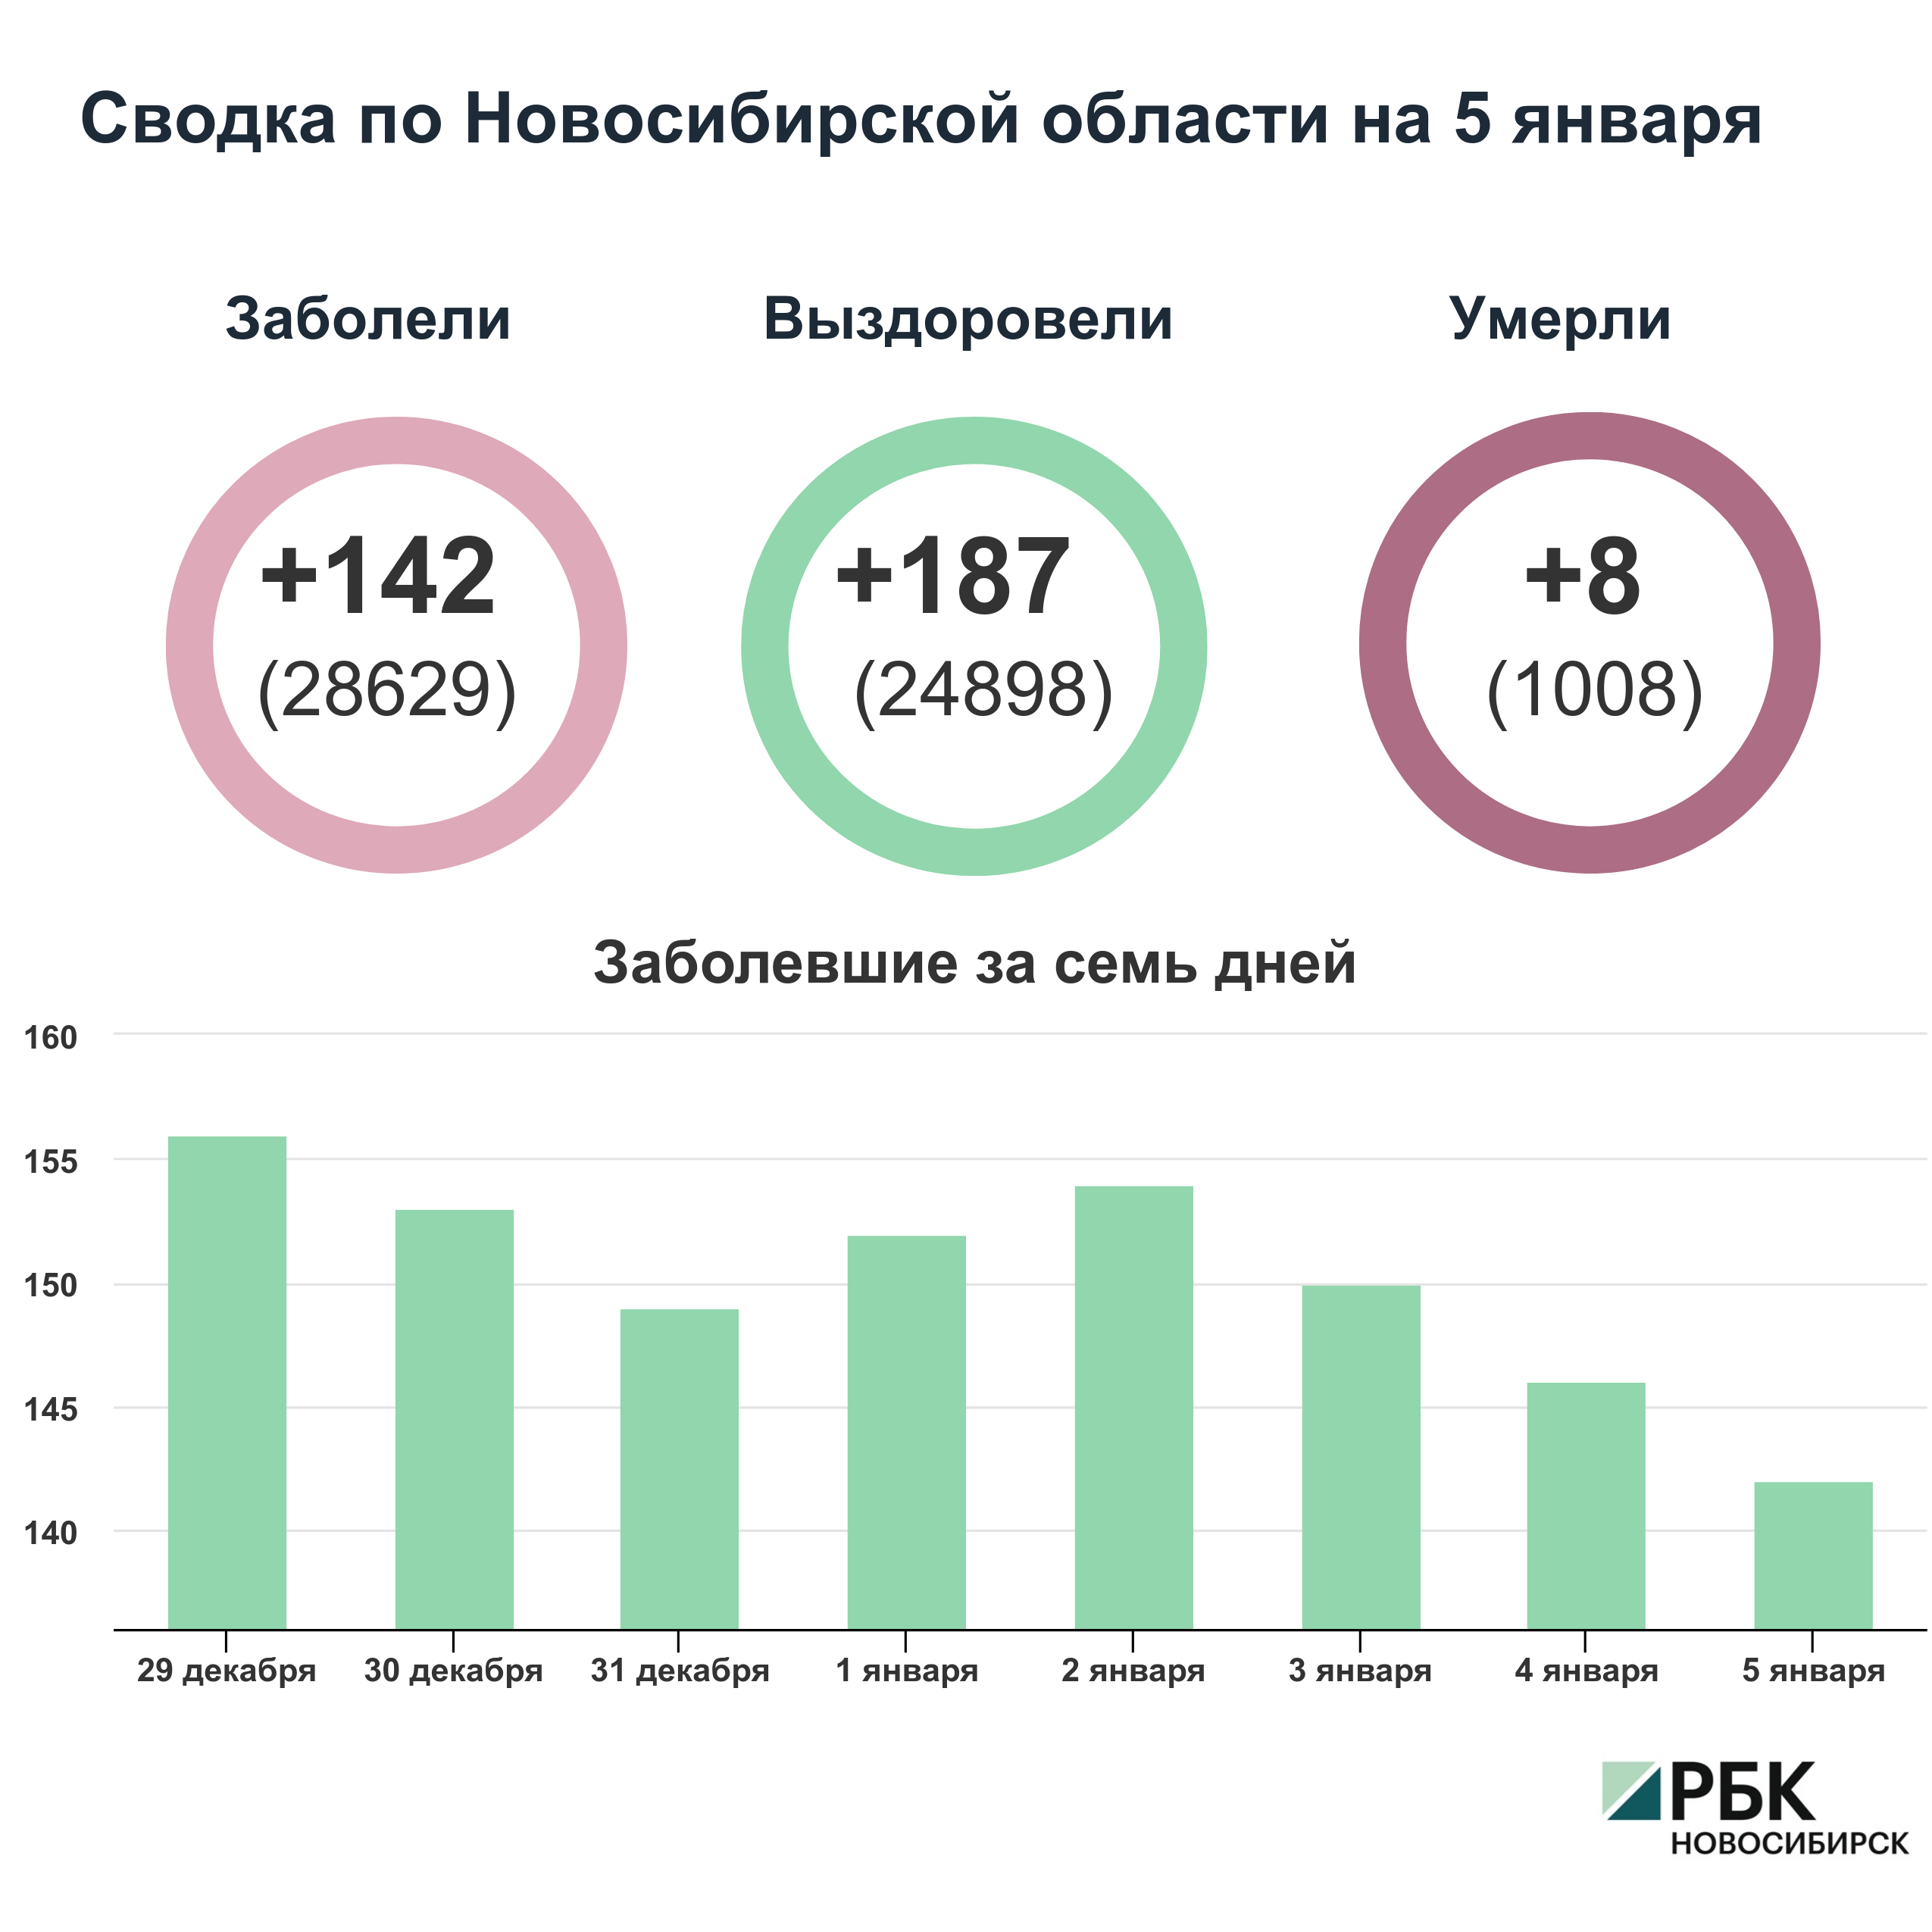 Коронавирус в Новосибирске: сводка на 5 января